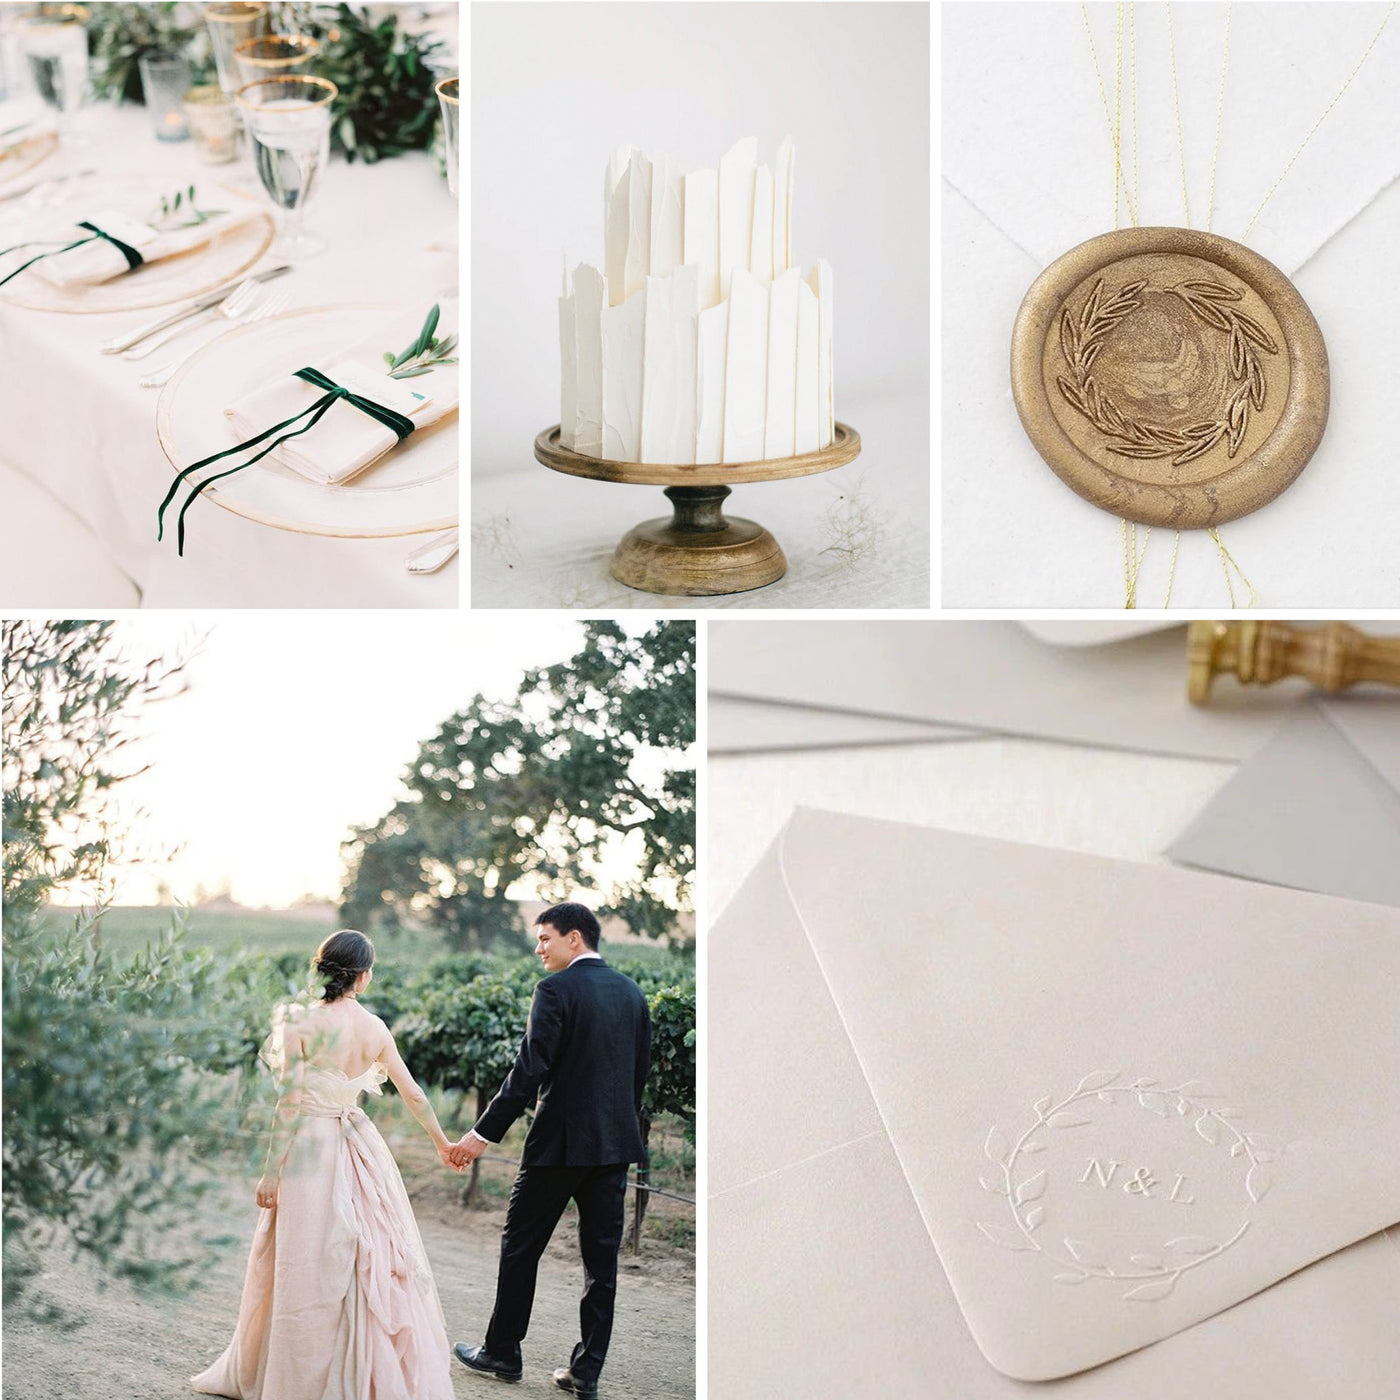 Outdoor Garden Wedding Inspiration | Gold Laurel Wreath Self-Adhesive Wax Seals and Botanical Monogram Envelope Embosser | Heirloom Seals